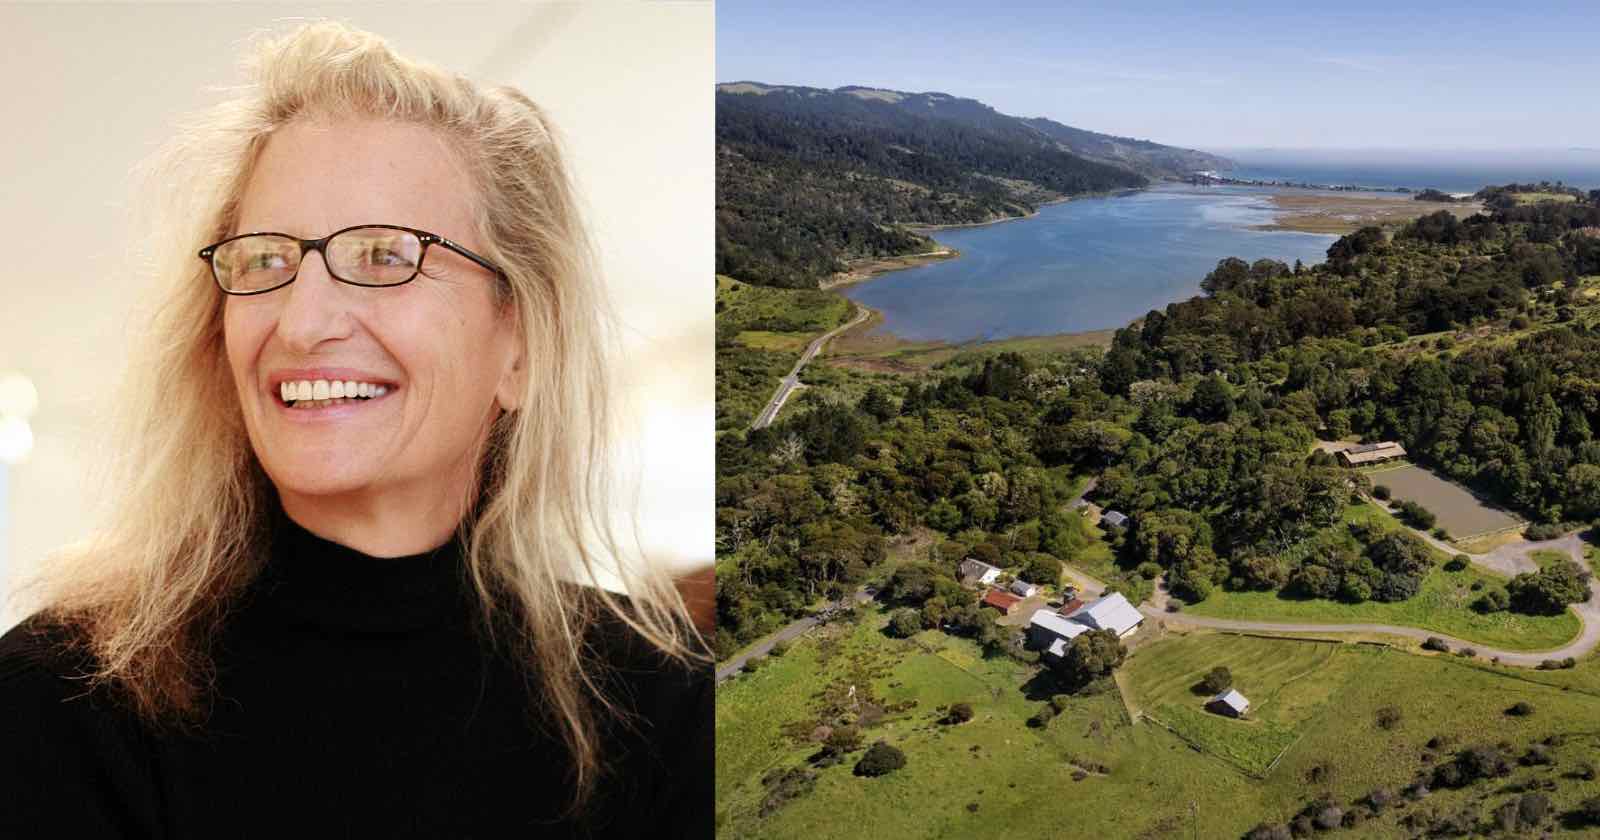  annie leibovitz selling her 65-acre california farm home 